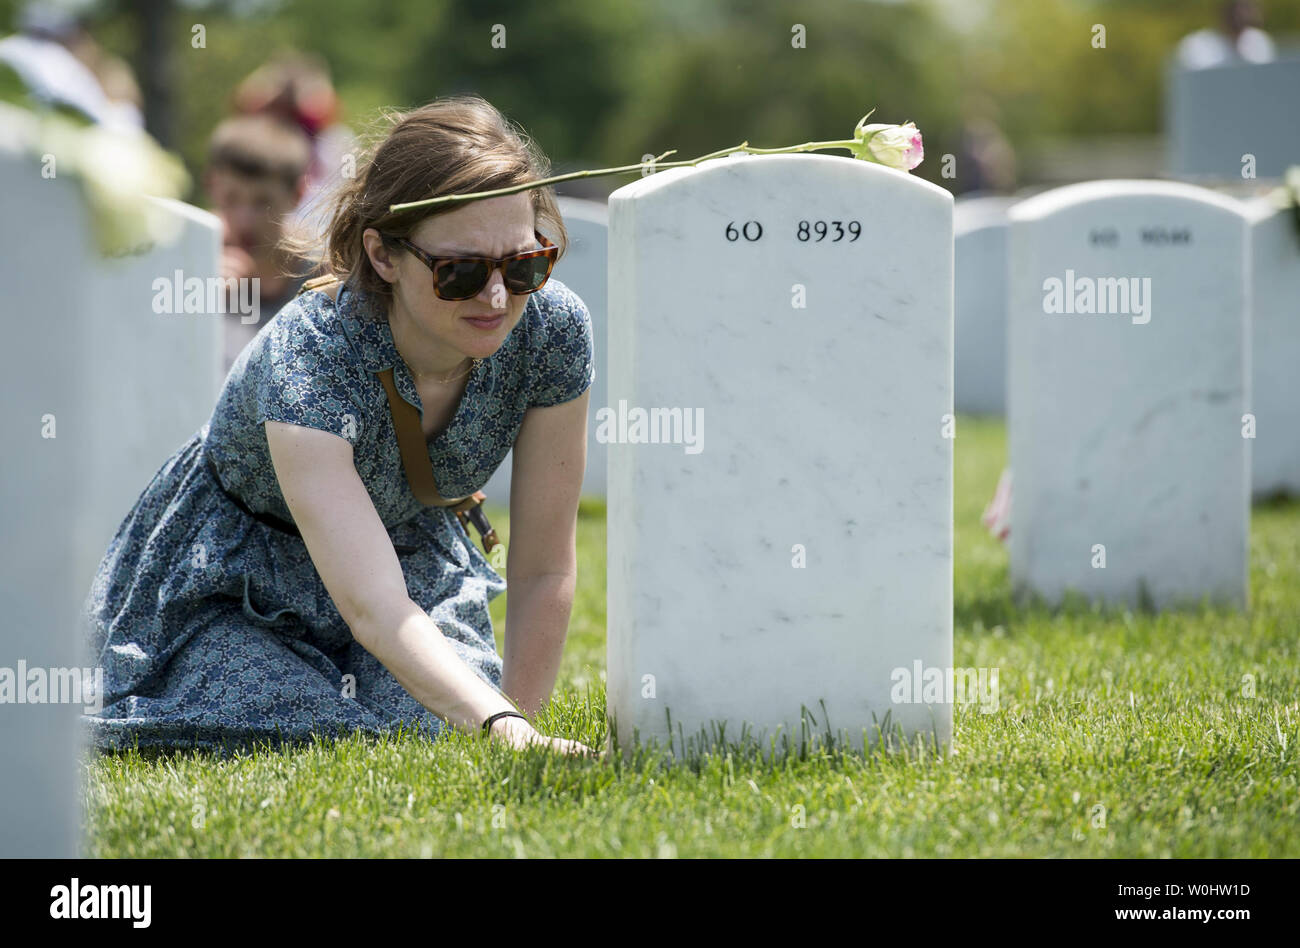 Laura Heaton visits die Grabstätte der Armee Sfc. Bradley Bohle auf dem Arlington National Cemetery am Memorial Day, 25. Mai 2015 in Arlington, Virginia. Foto von Kevin Dietsch/UPI Stockfoto